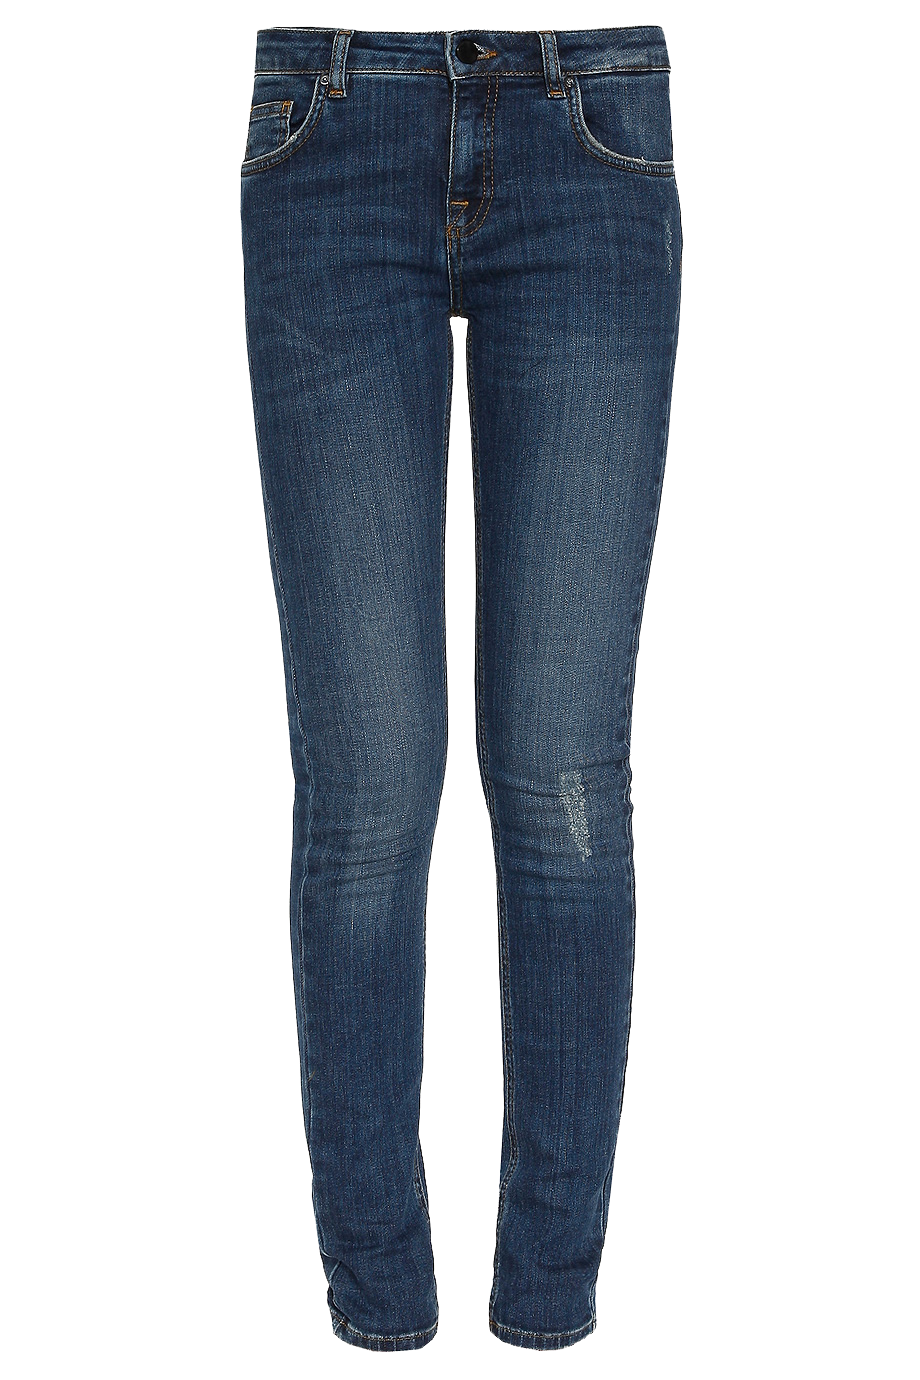 Victoria Beckham Denim Super Skinny Stretch Jeans